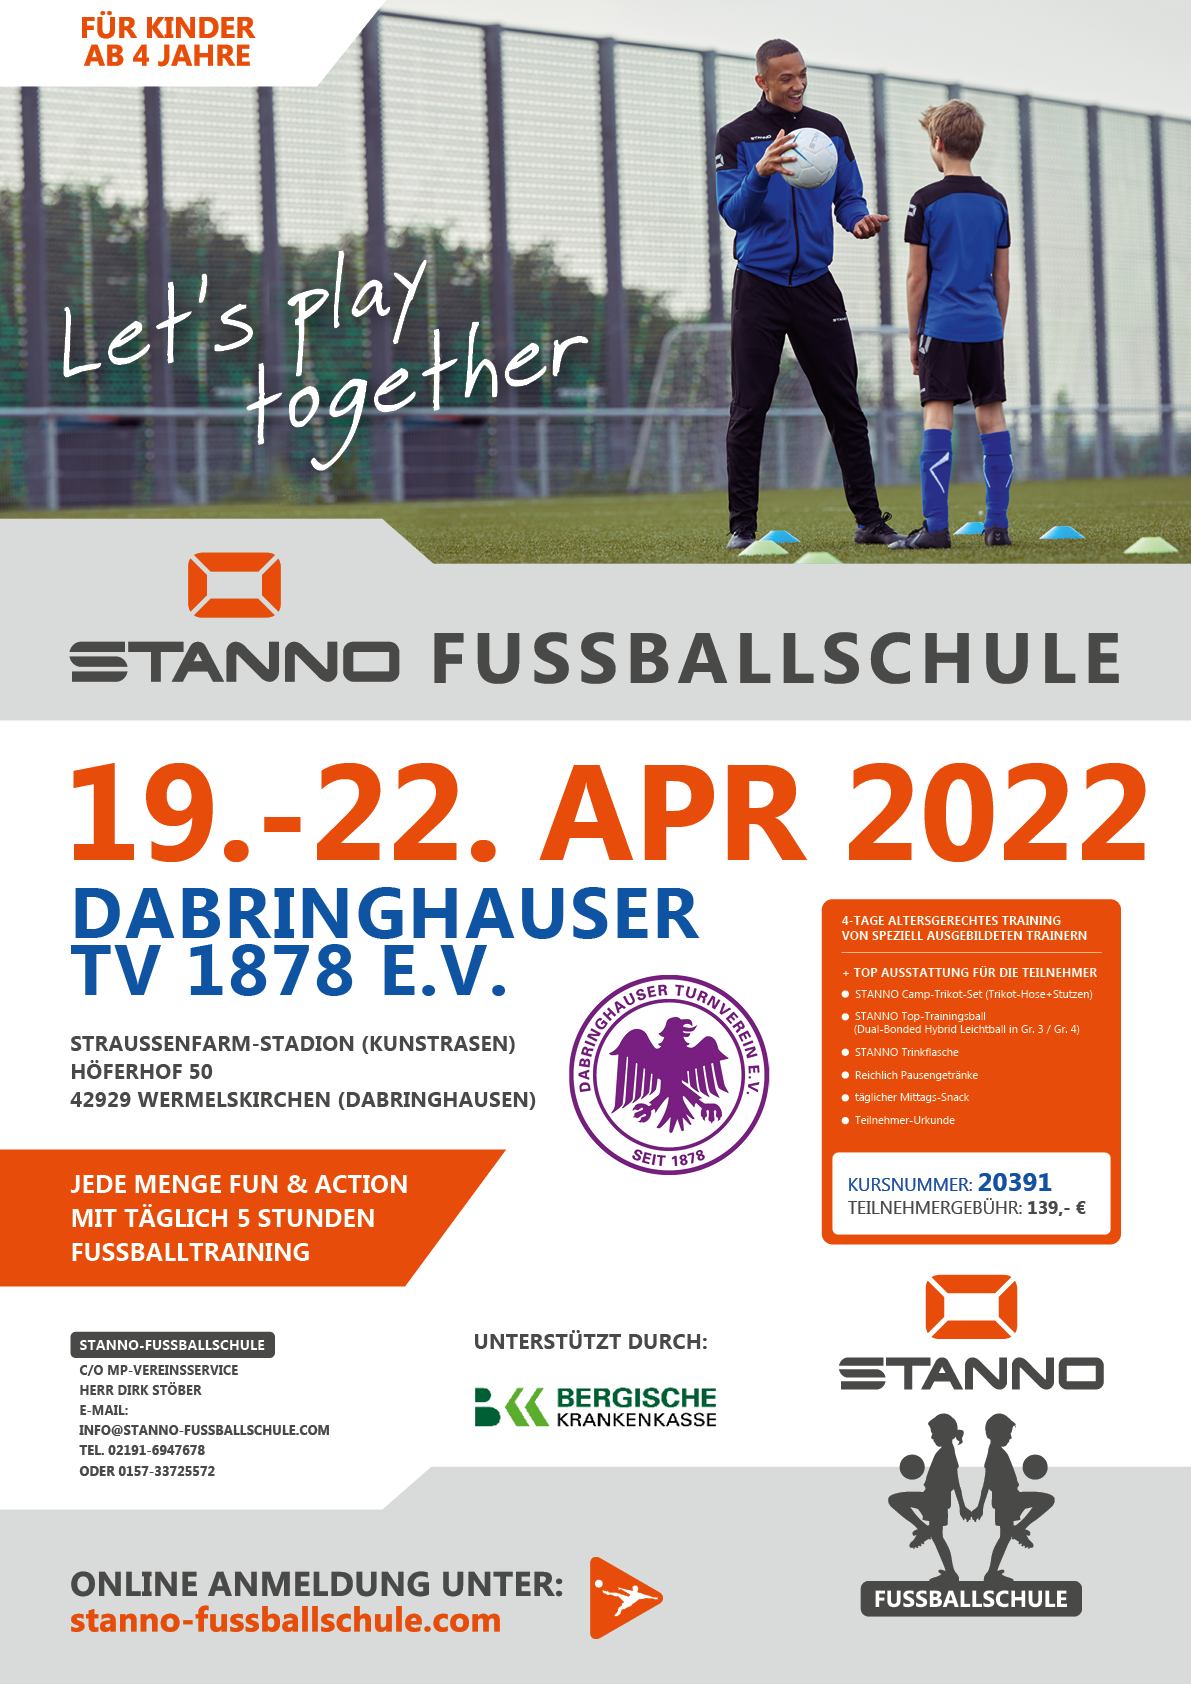 Plakat A2 STANNO Fussballschule